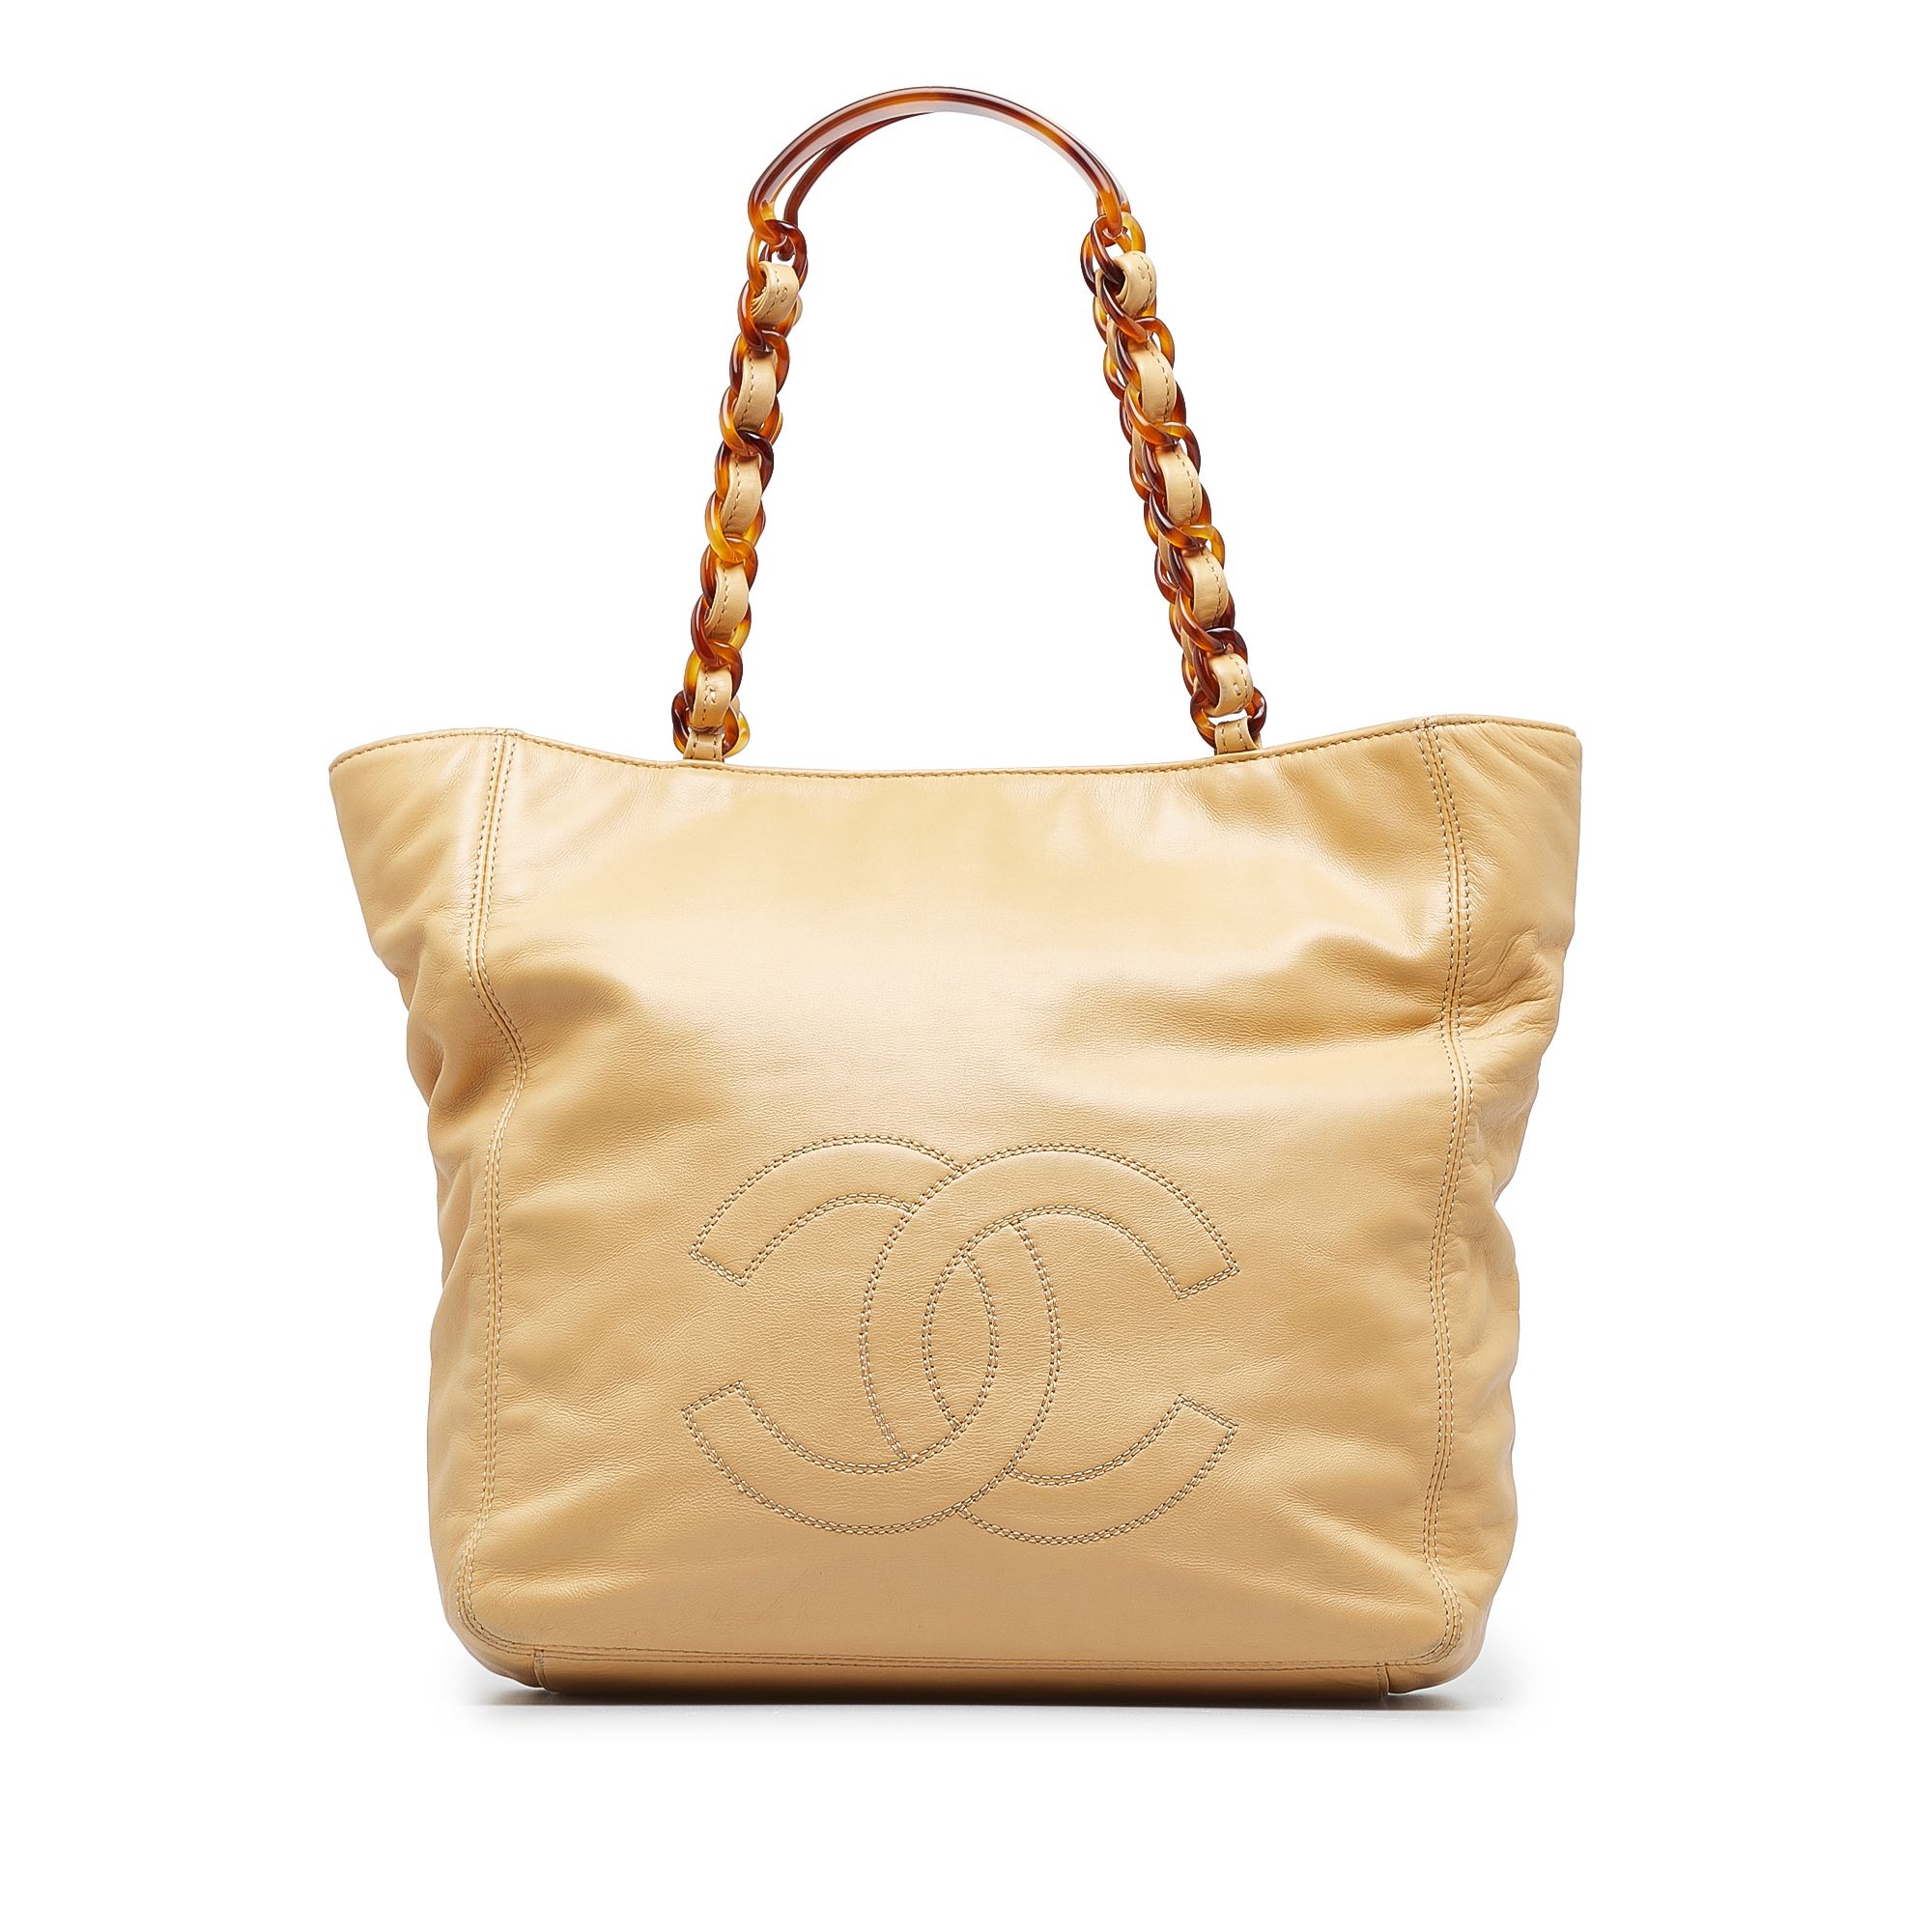 Chanel Chanel CC Tote Bag